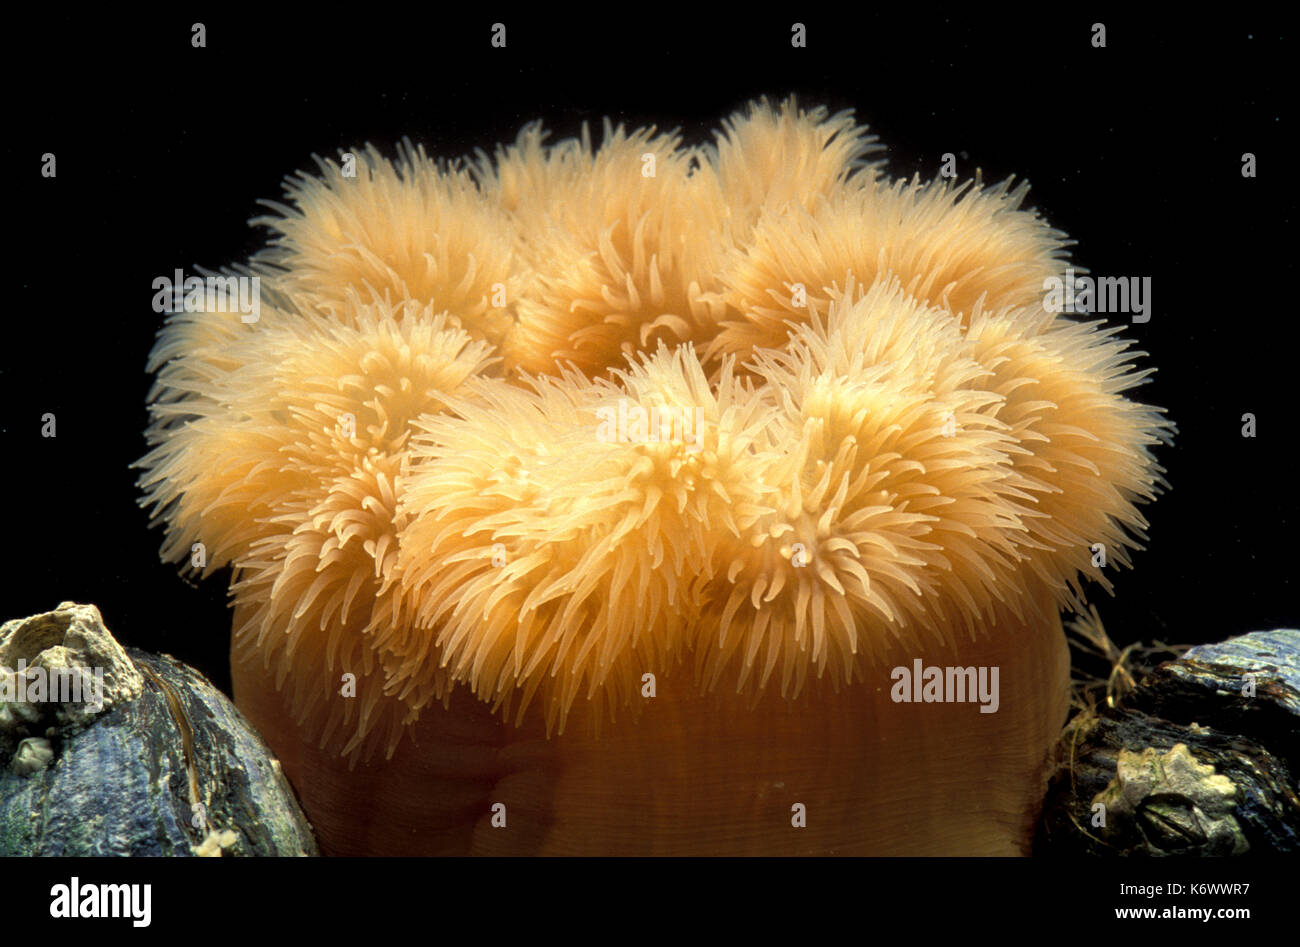 Plumrose Anemone, Metridium senile, orange colour with tentacles Stock Photo